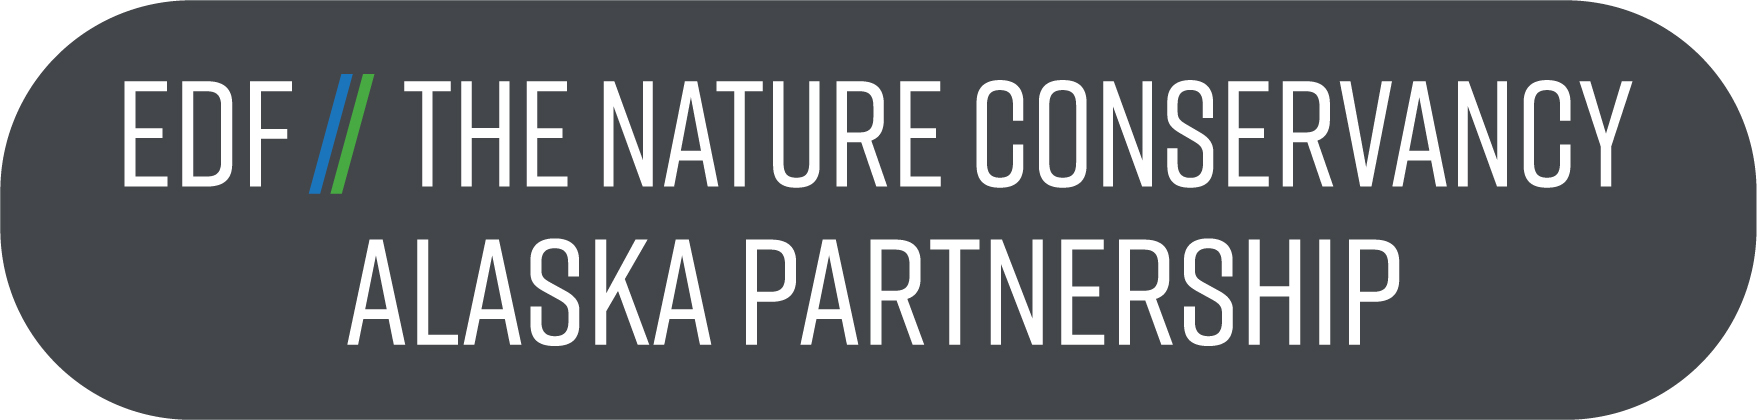 EDF-NatureConservancy Alaska Partnership_logo copy.jpg